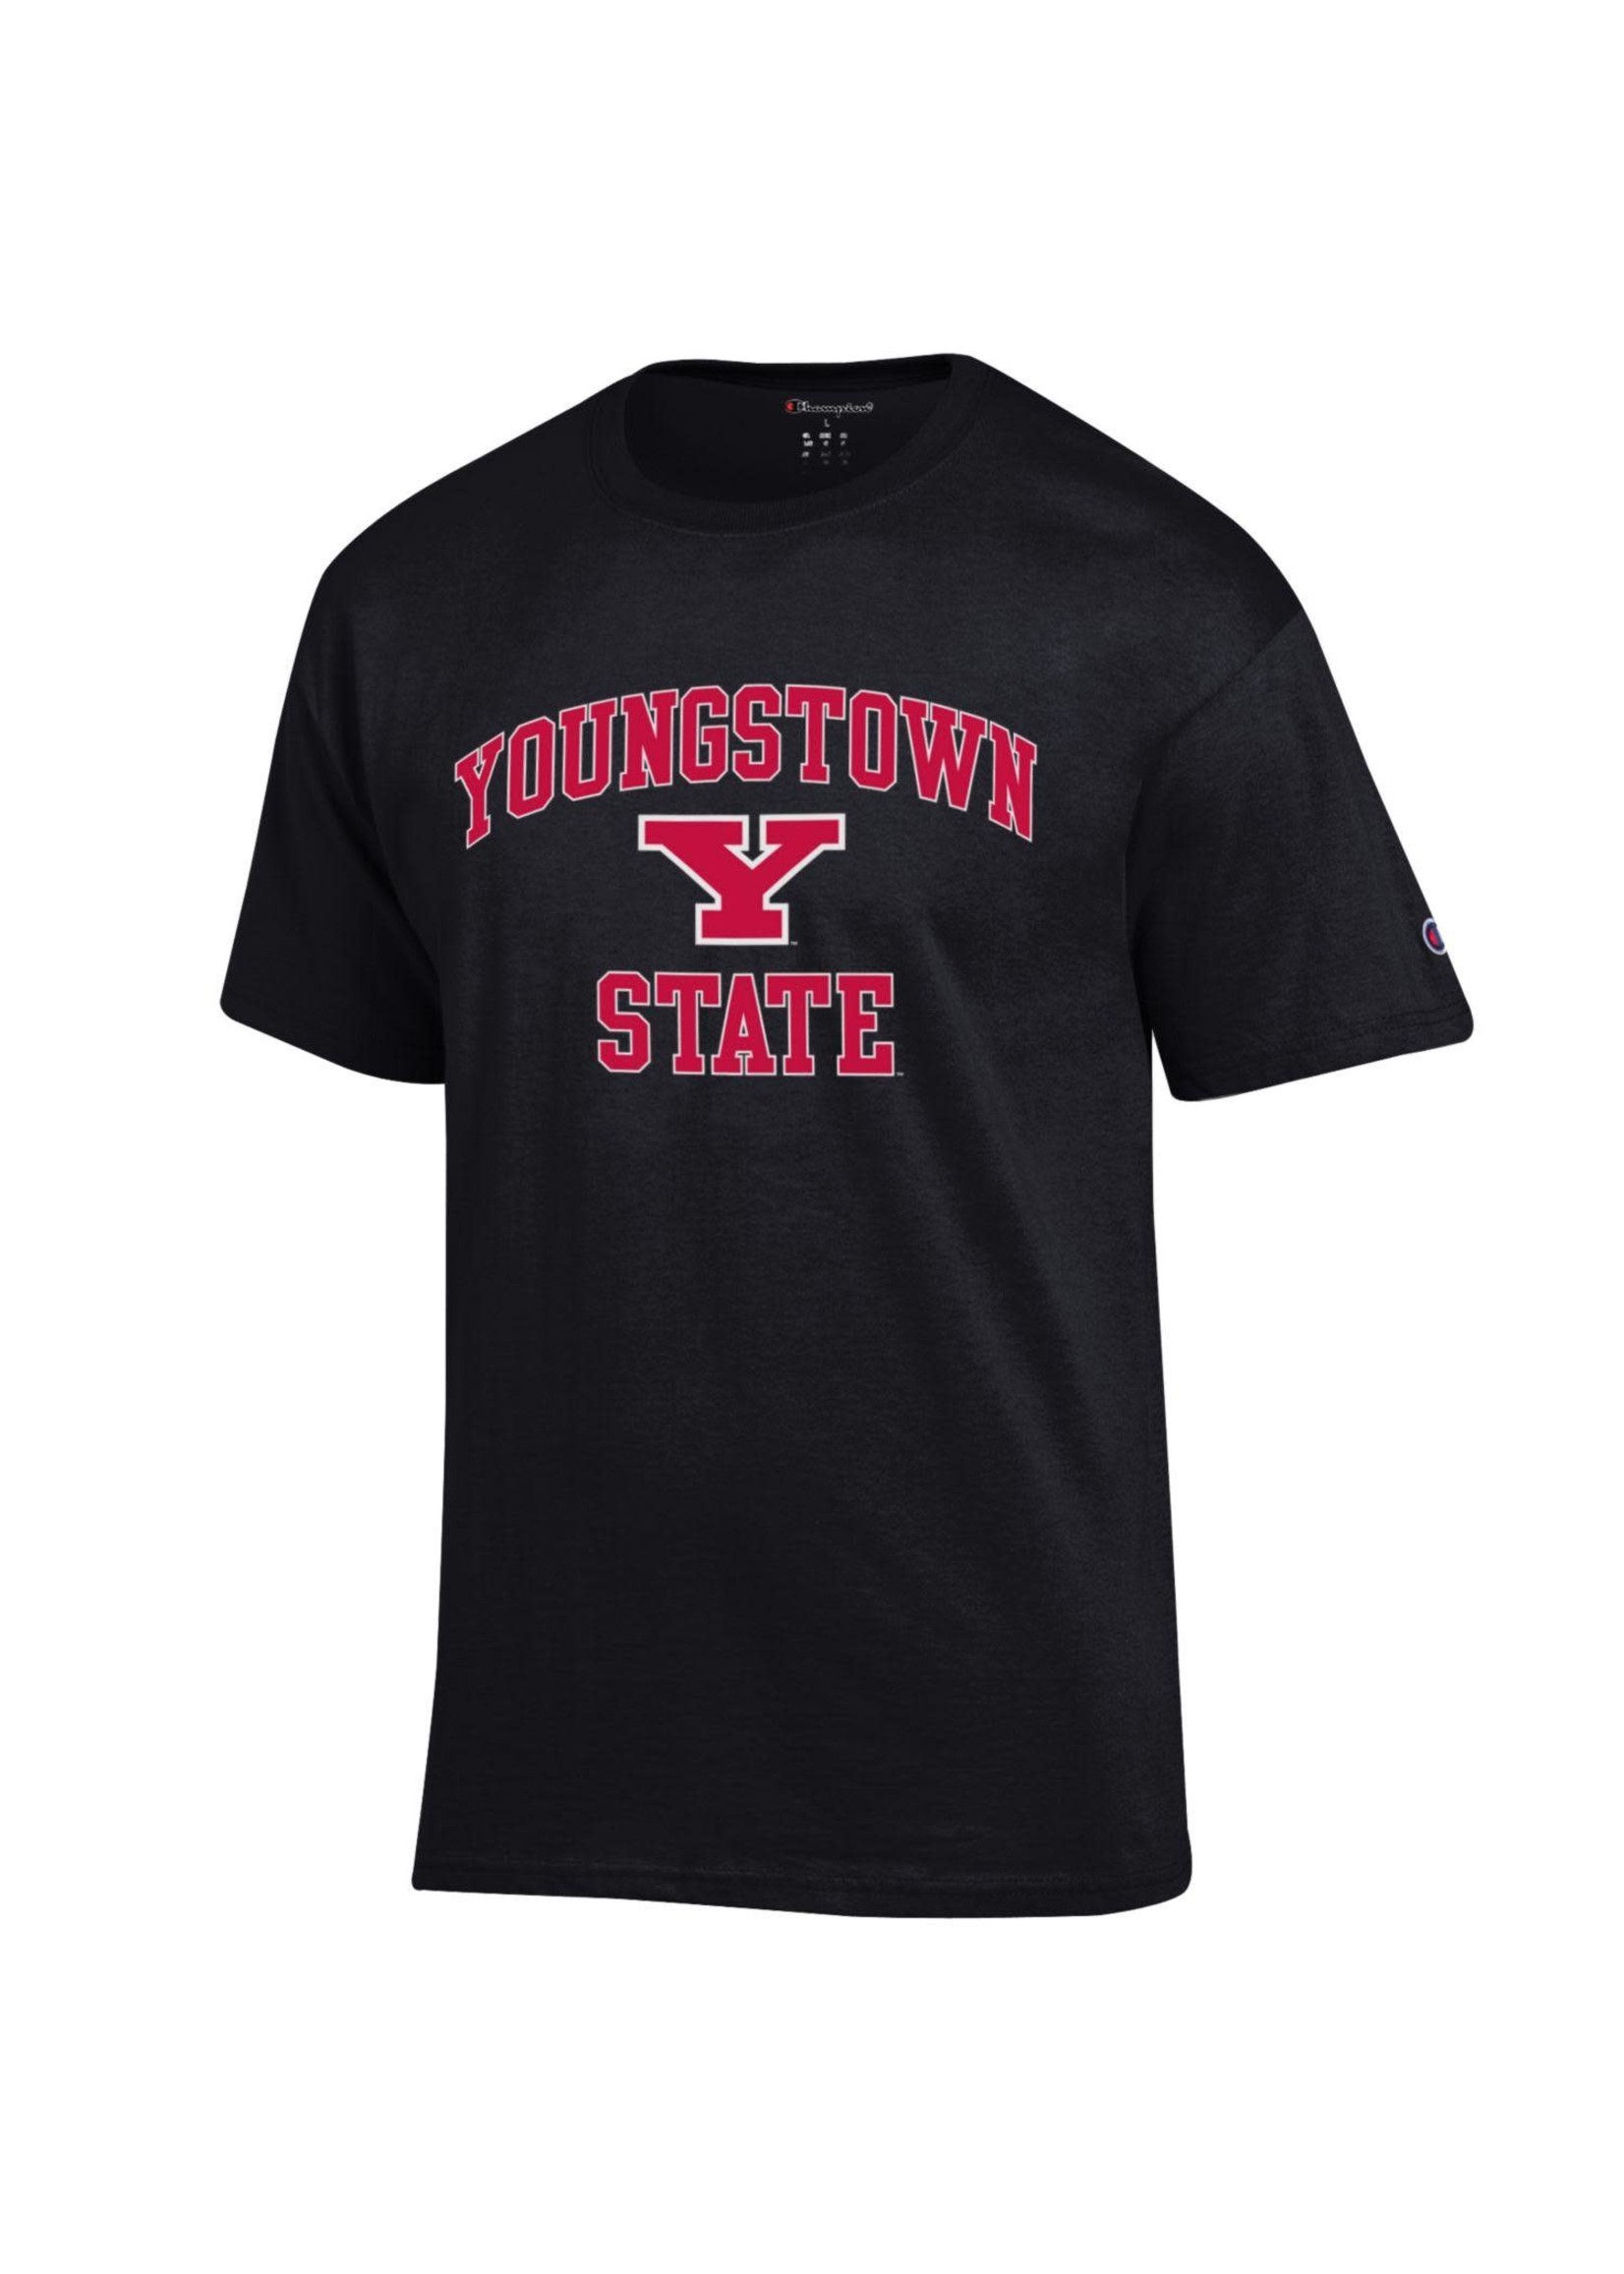 Champion Youngstown State University Black T-Shirt